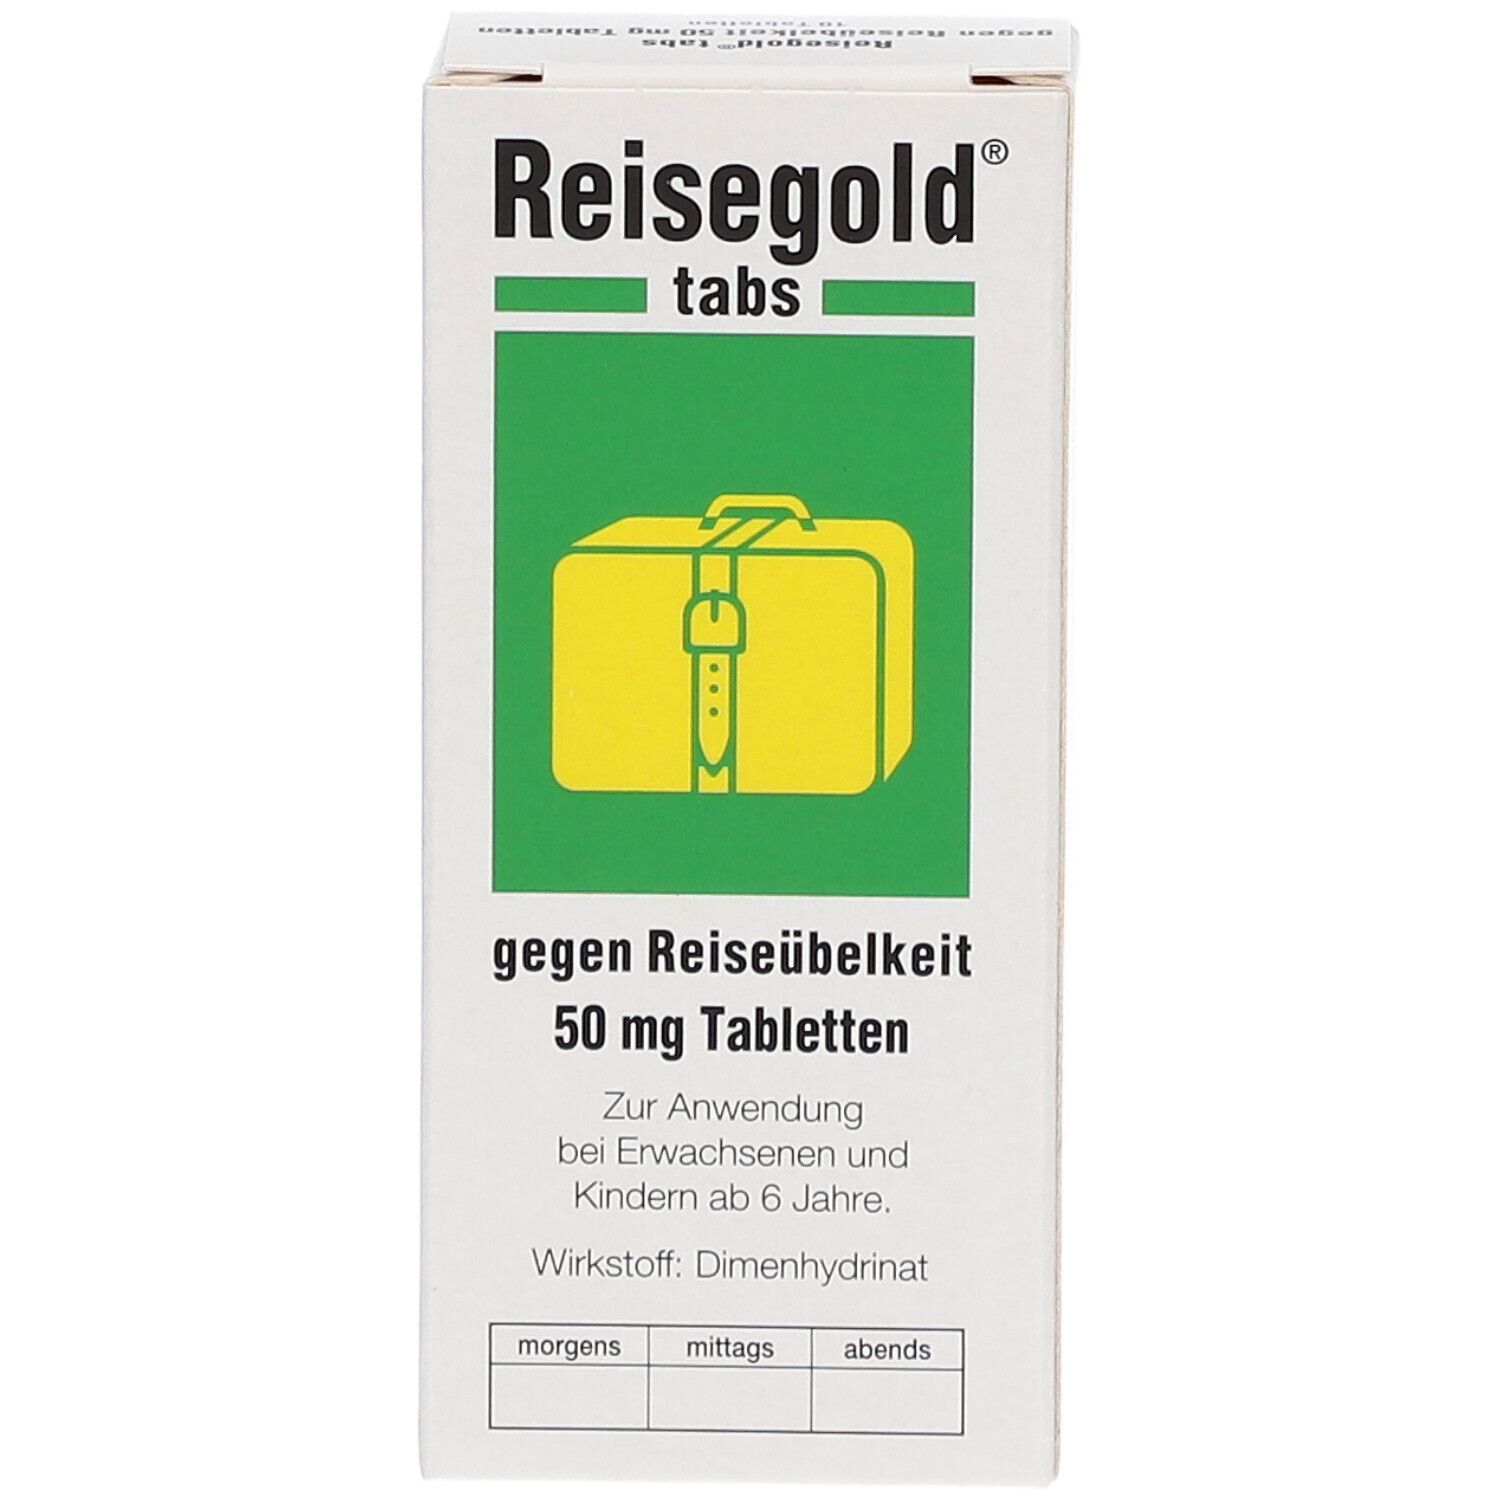 Reisegold® Tabs